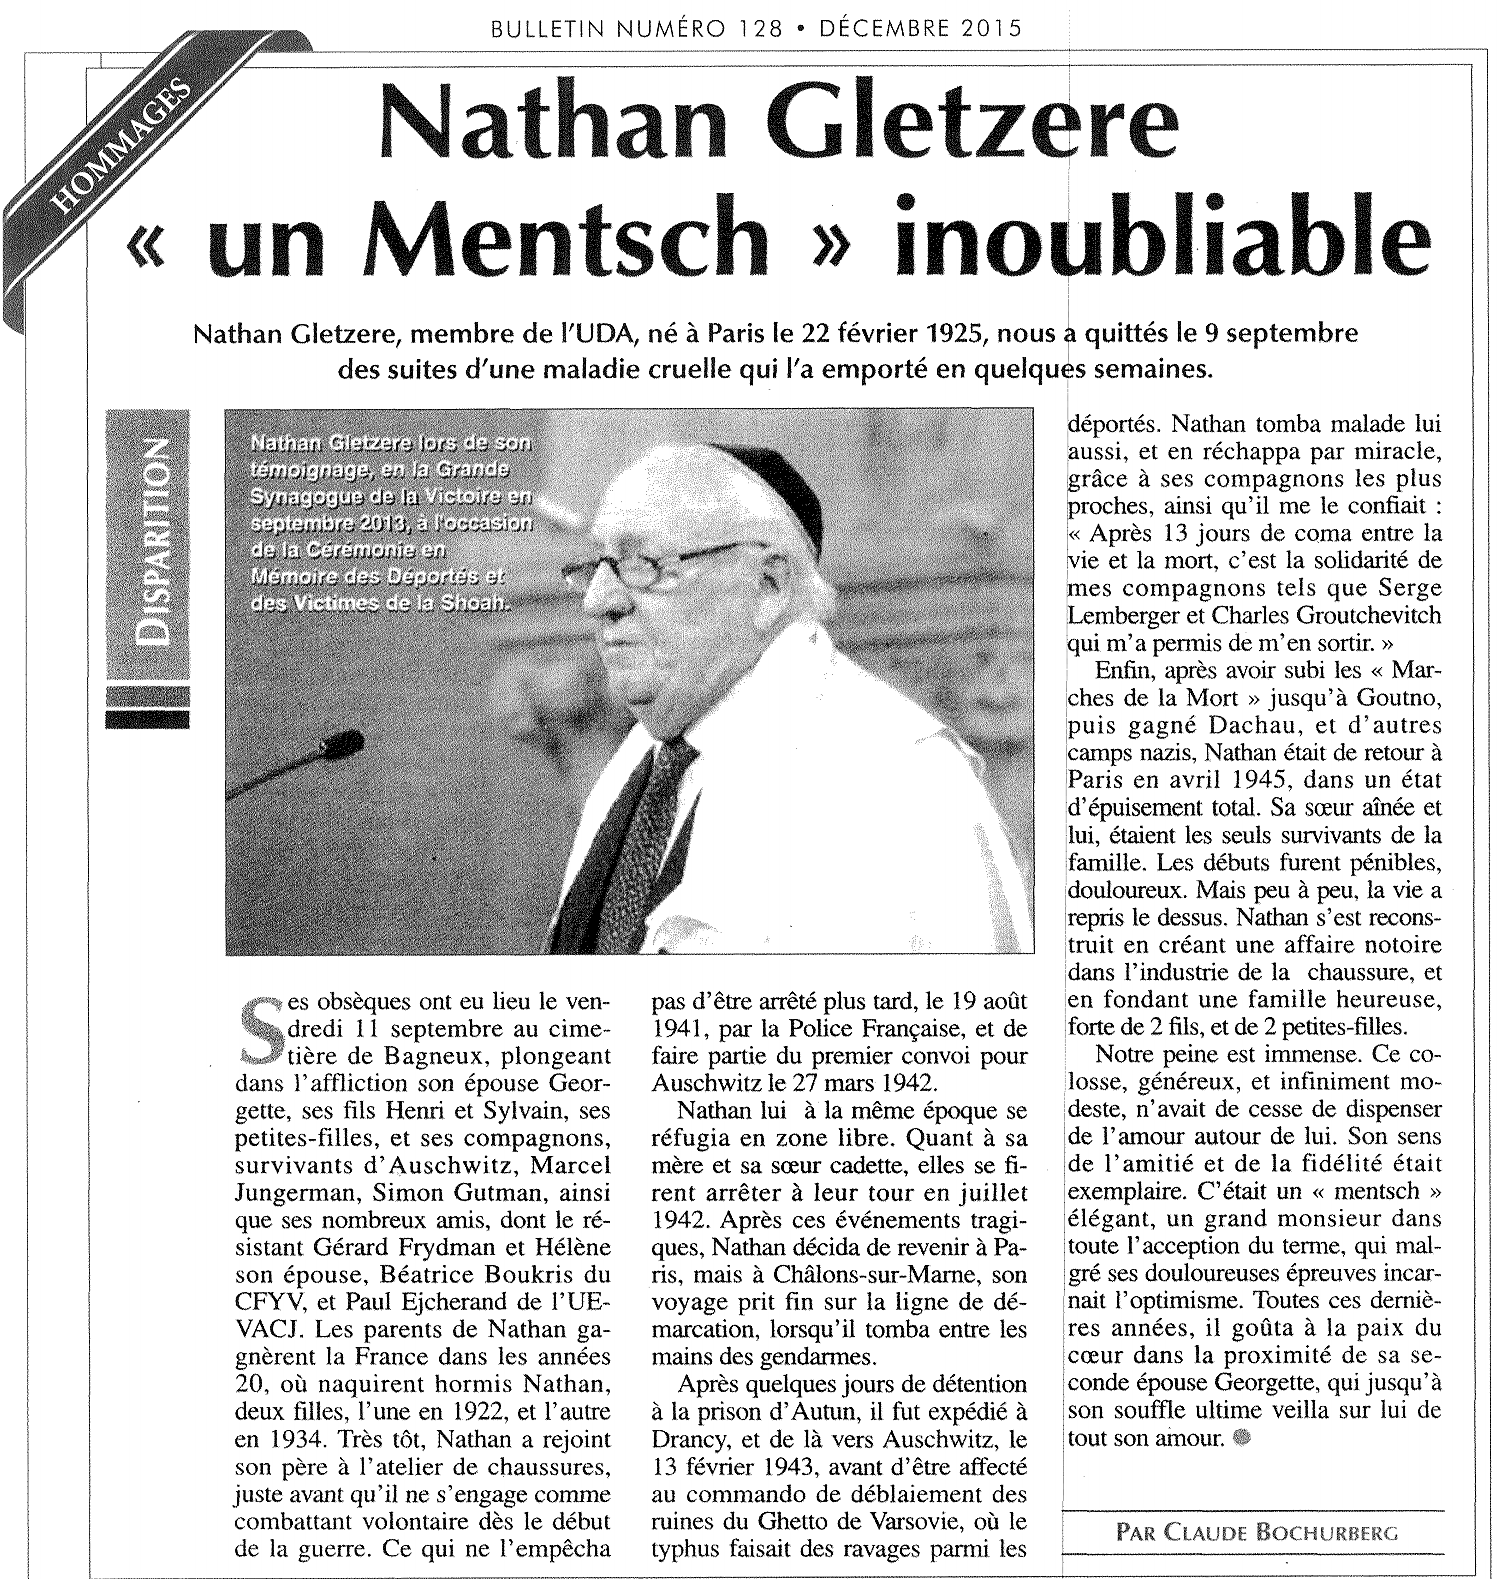 Nathan Gletzere "un Mensch" inoubliable